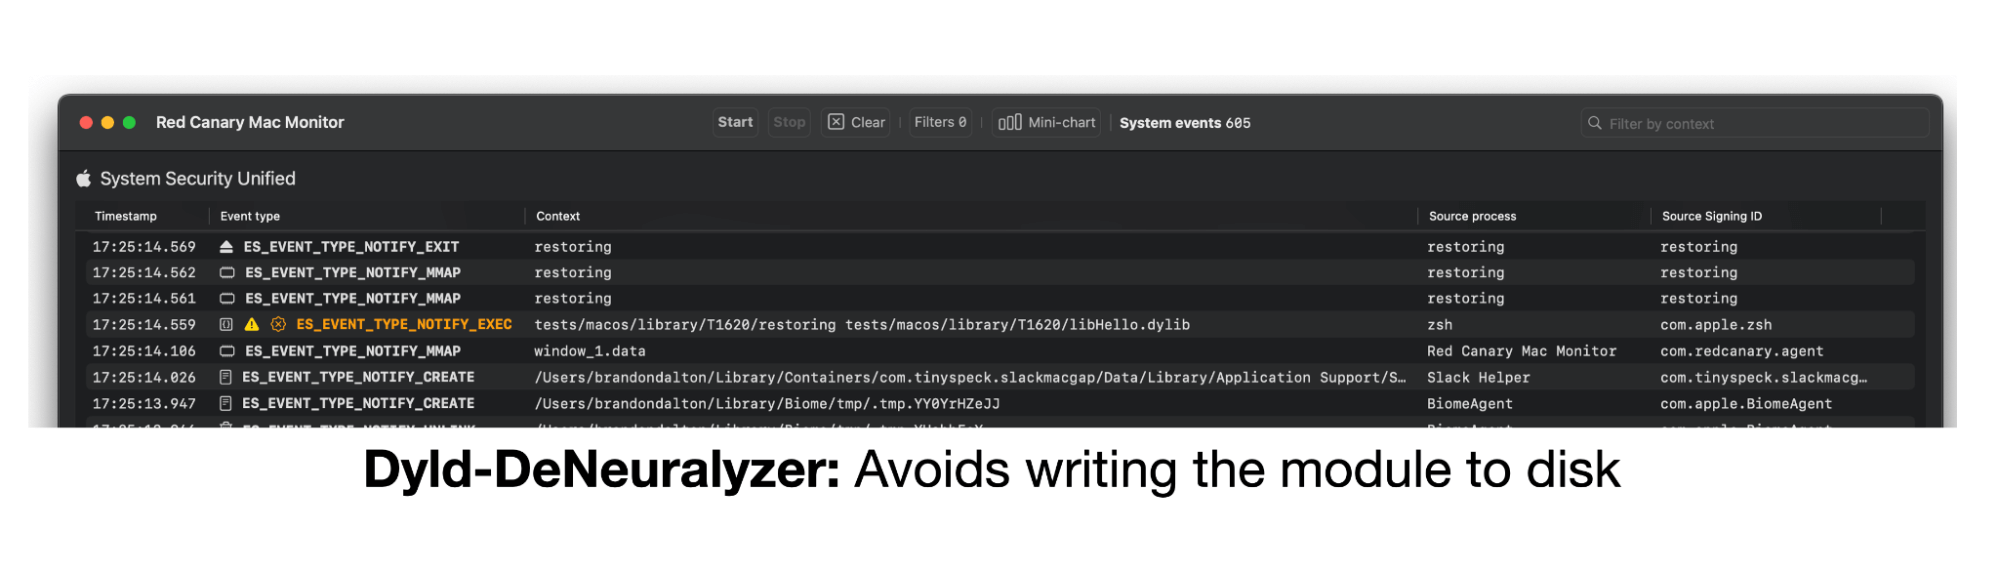 Mac Monitor screenshot depicting Dyld-DeNeuralyzer avoiding writing to disk